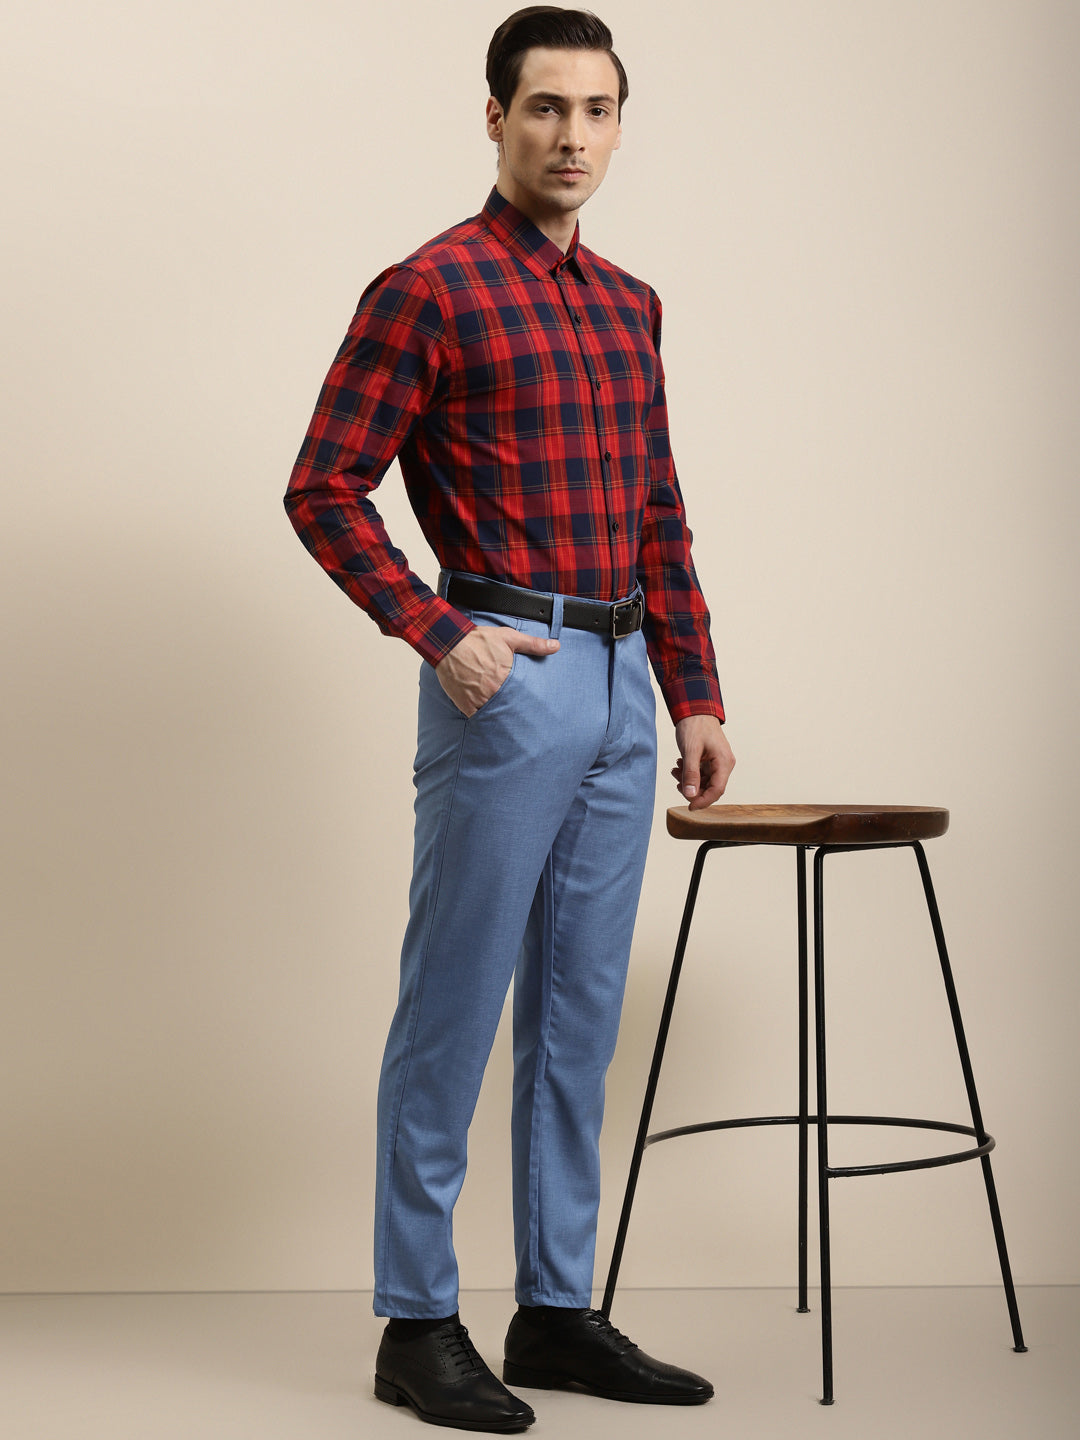 Men's Cotton Blend Sky Blue Solid Trouser - Sojanya